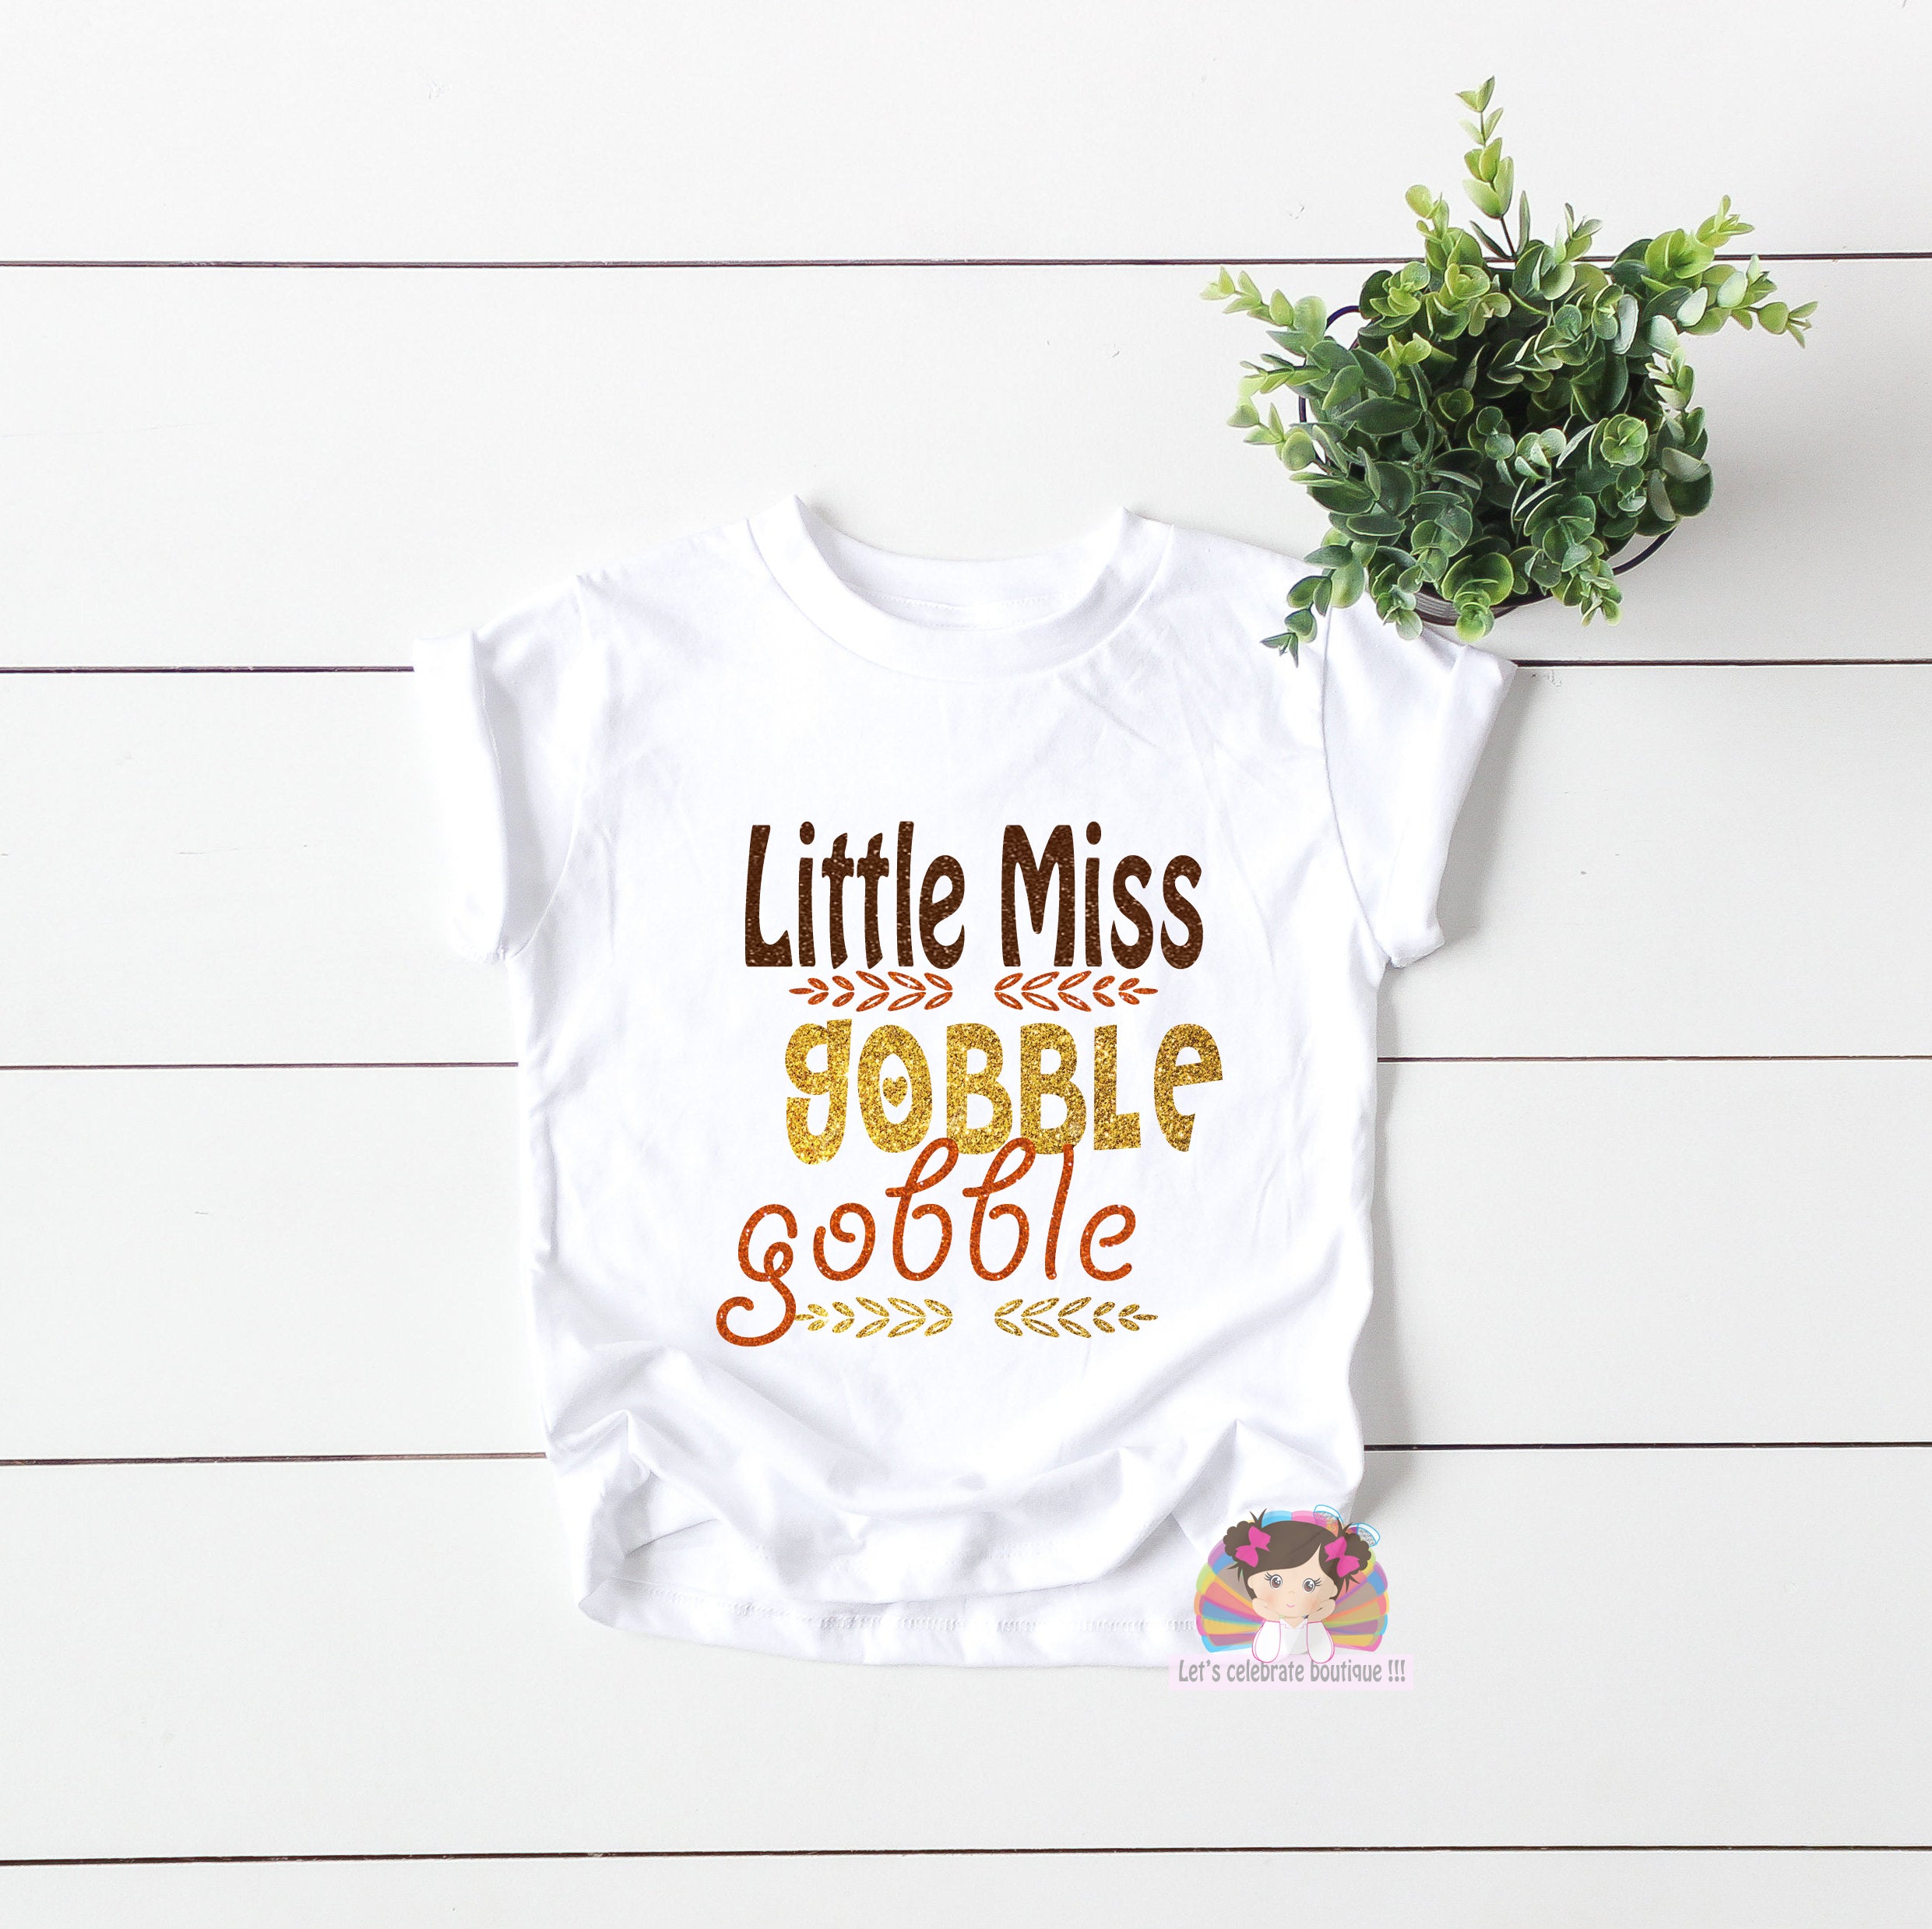 Little Miss Goggle Goggle Shirt